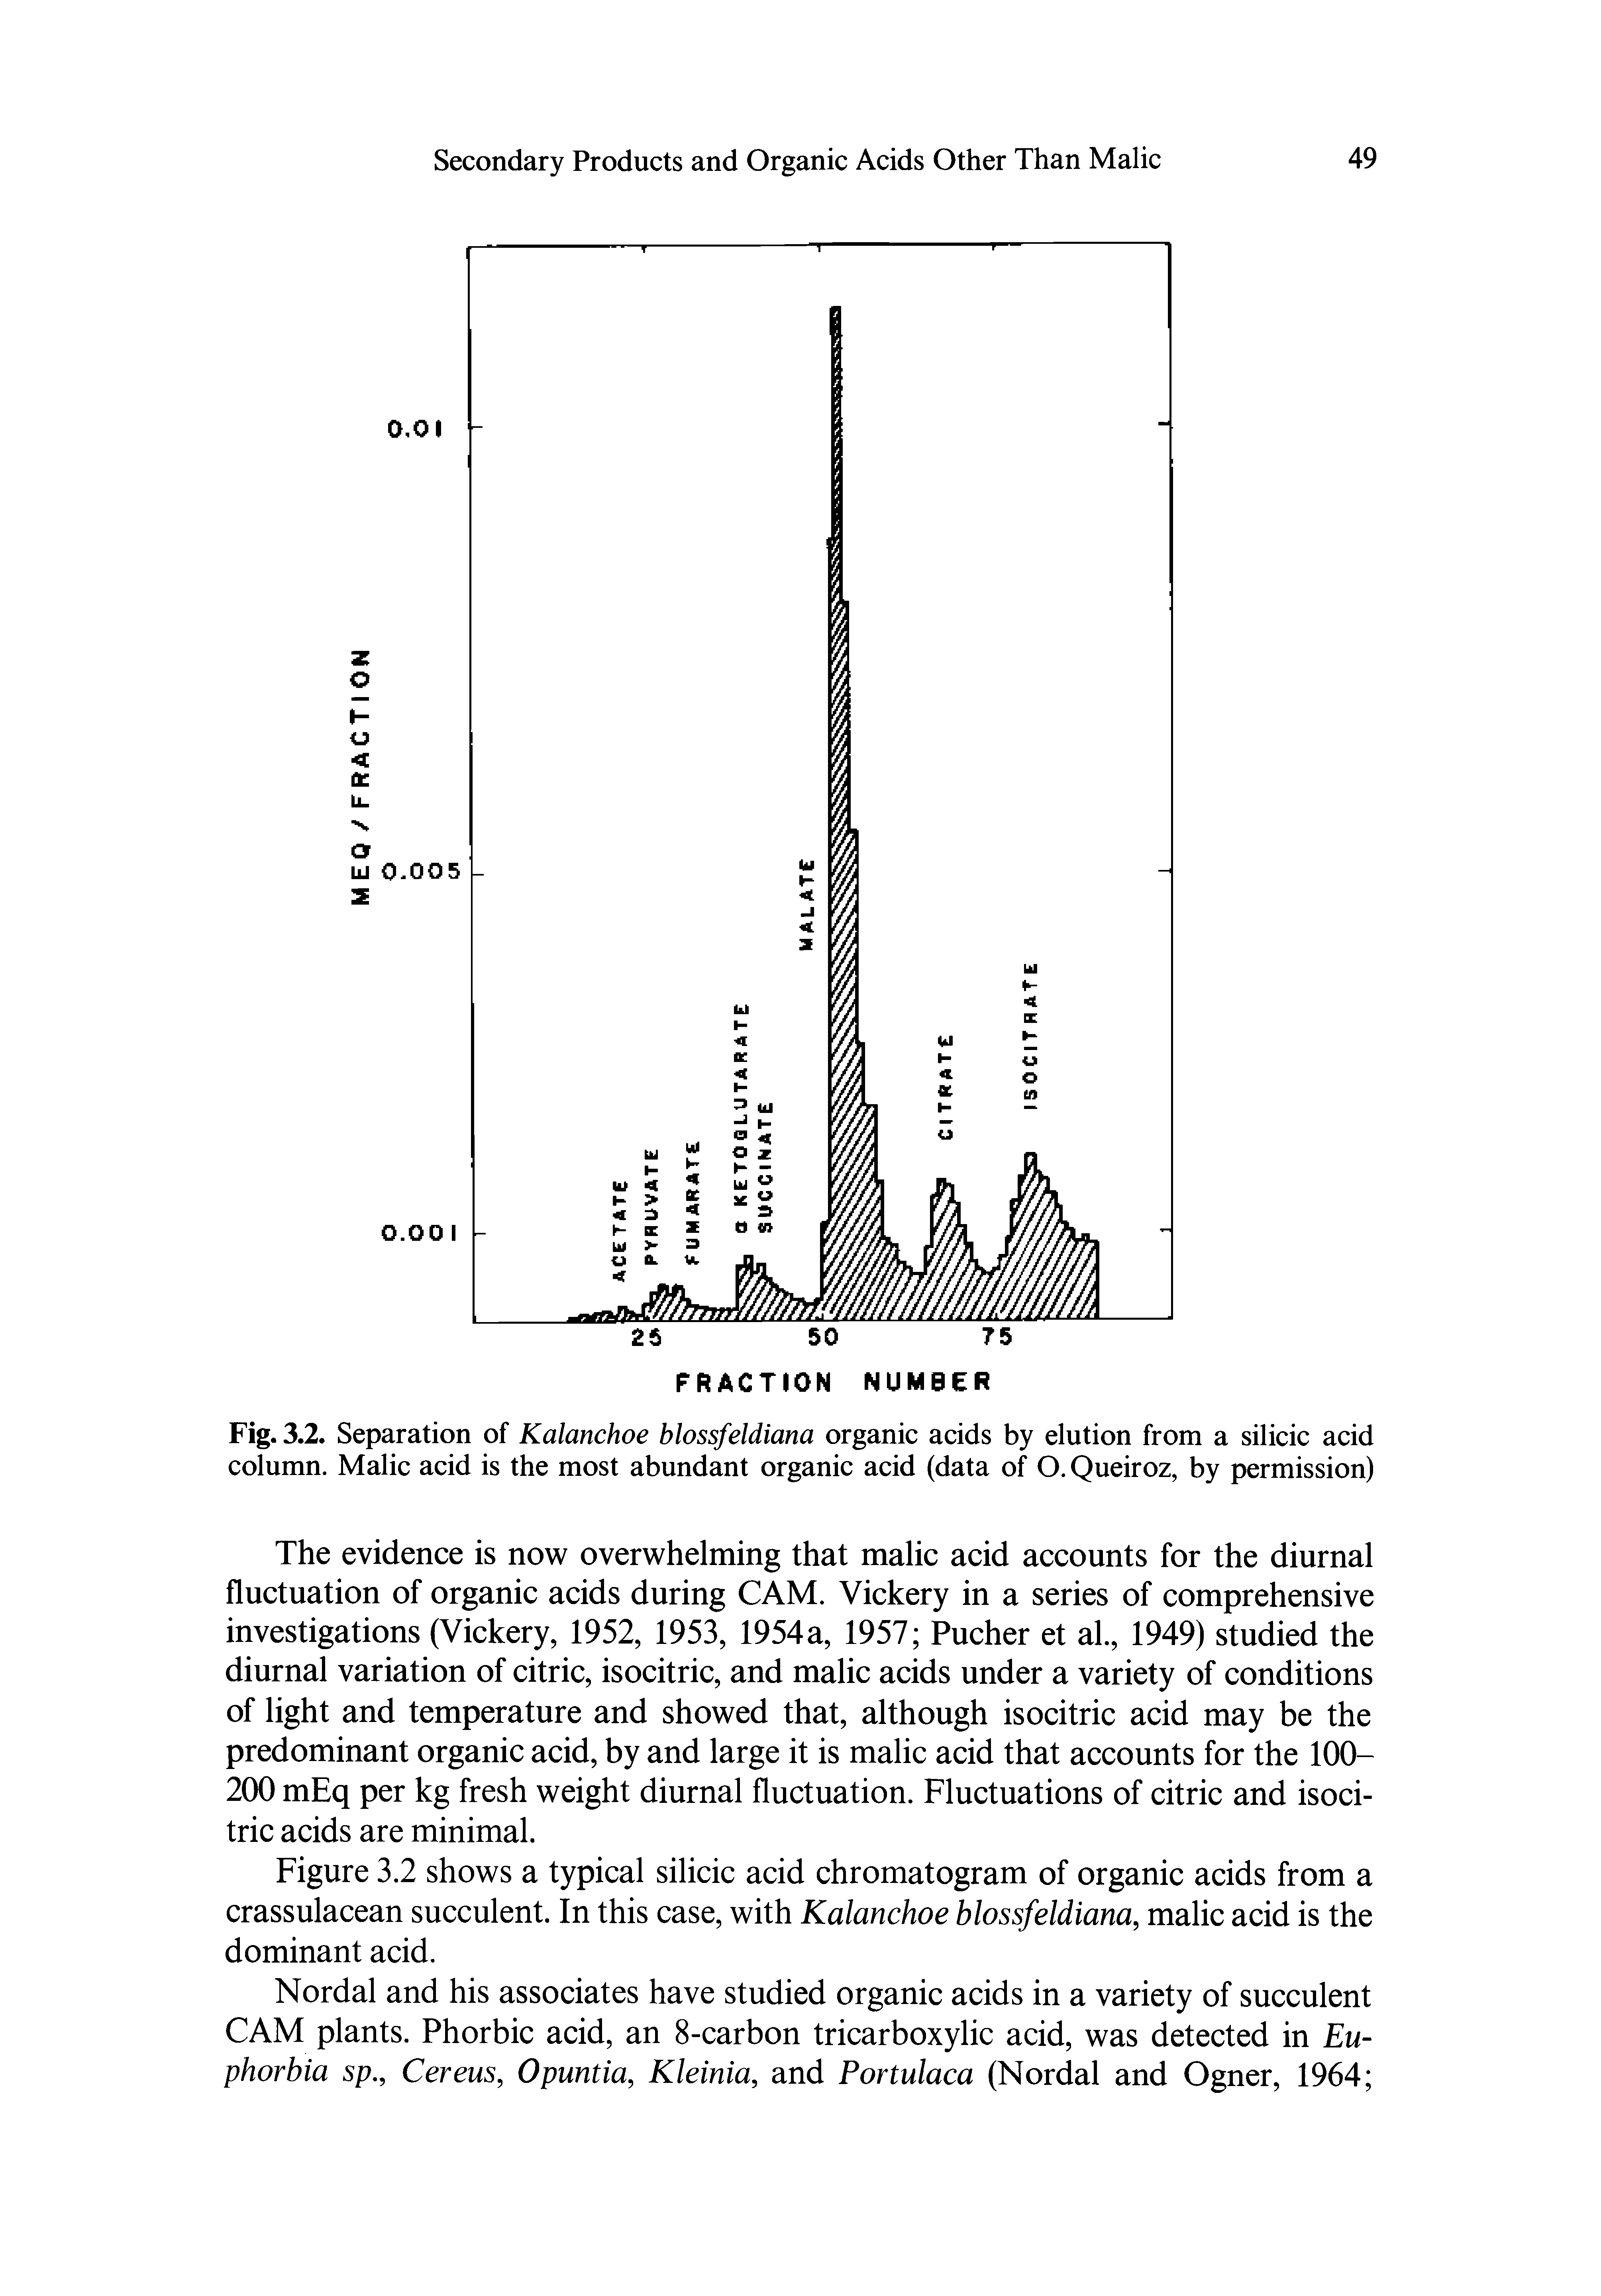 Fig. 3.2. Separation of Kalanchoe blossfeldiana organic acids by elution from a silicic acid column. Malic acid is the most abundant organic acid (data of O. Queiroz, by permission)...